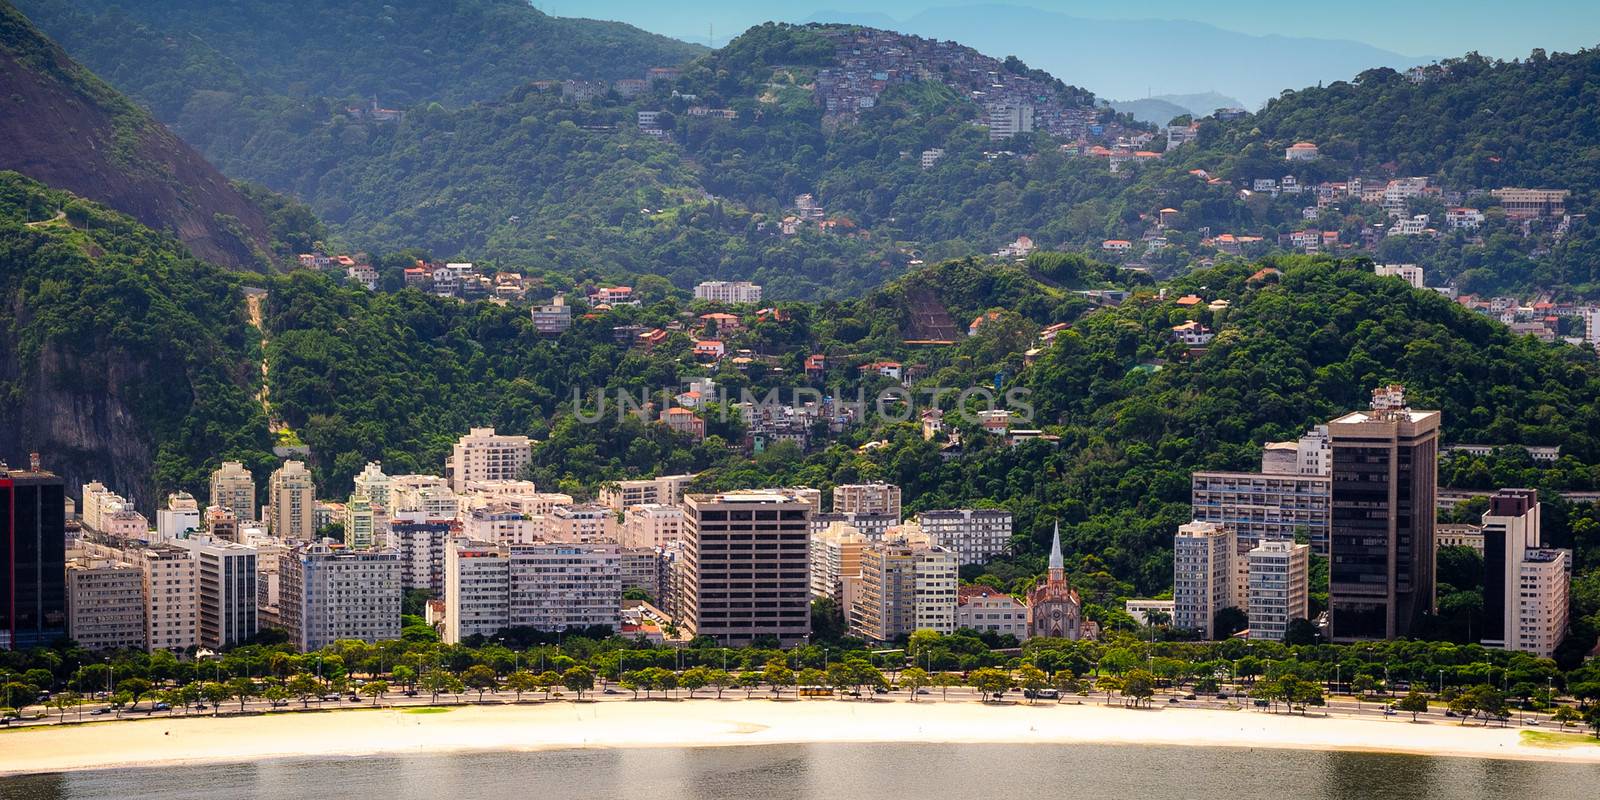 Aerial view of buildings on the beach front, Botafogo, Guanabara Bay, Rio De Janeiro, Brazil